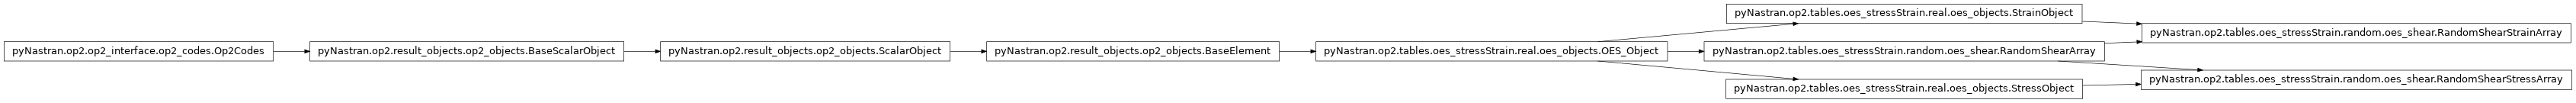 Inheritance diagram of pyNastran.op2.tables.oes_stressStrain.random.oes_shear